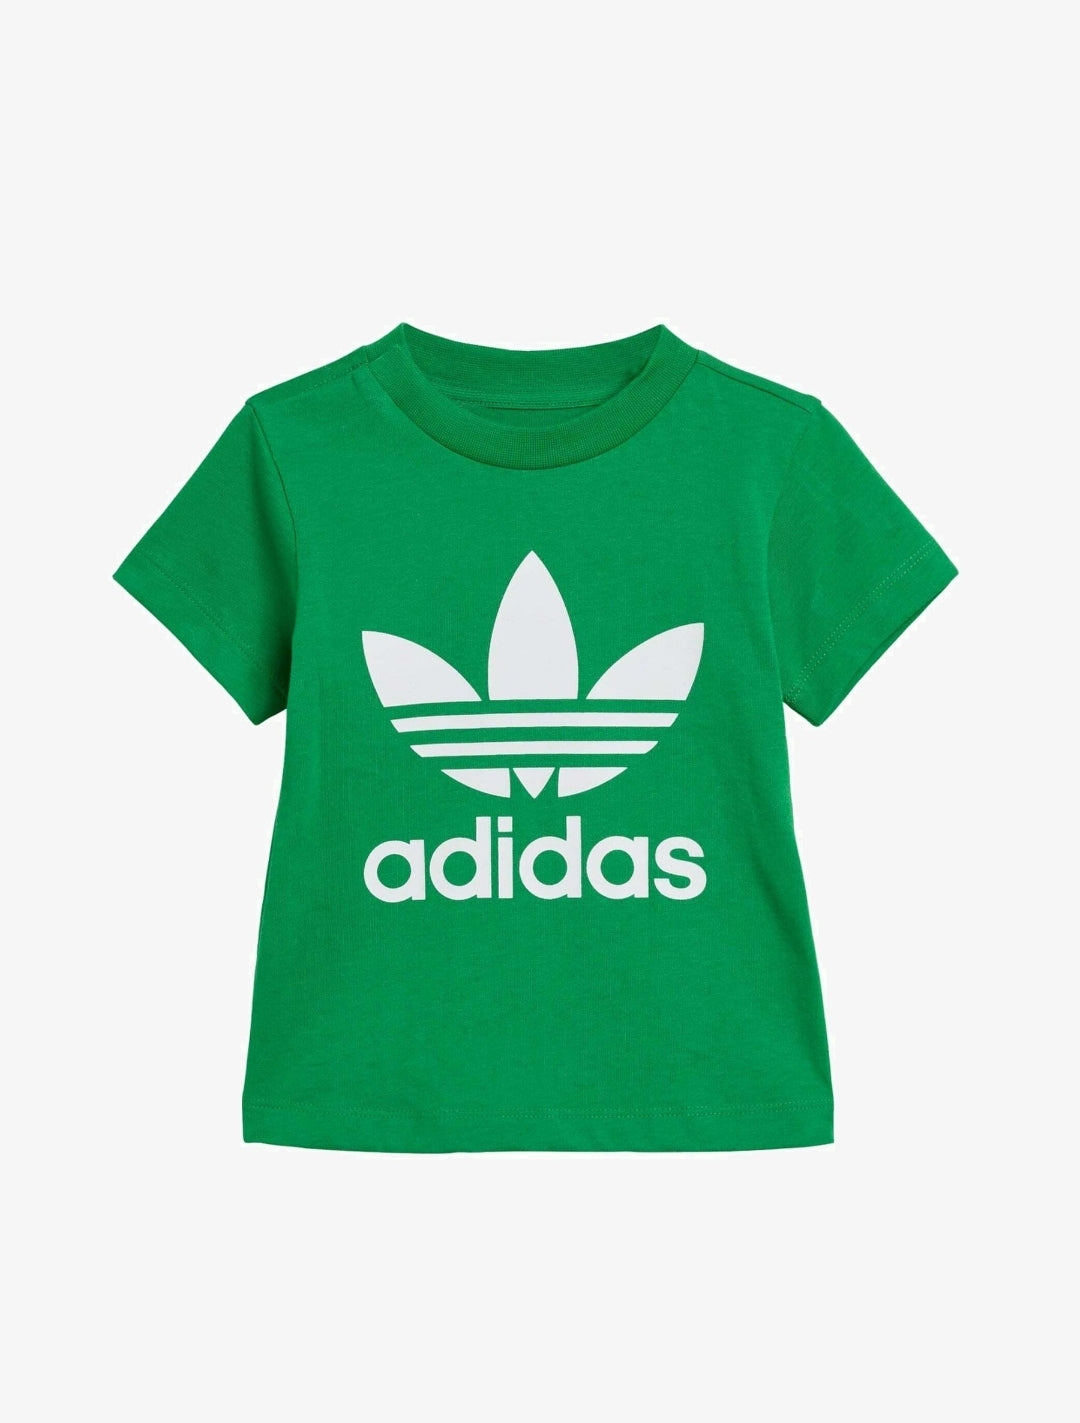 Adidas Trefoil Baby T-shirt 